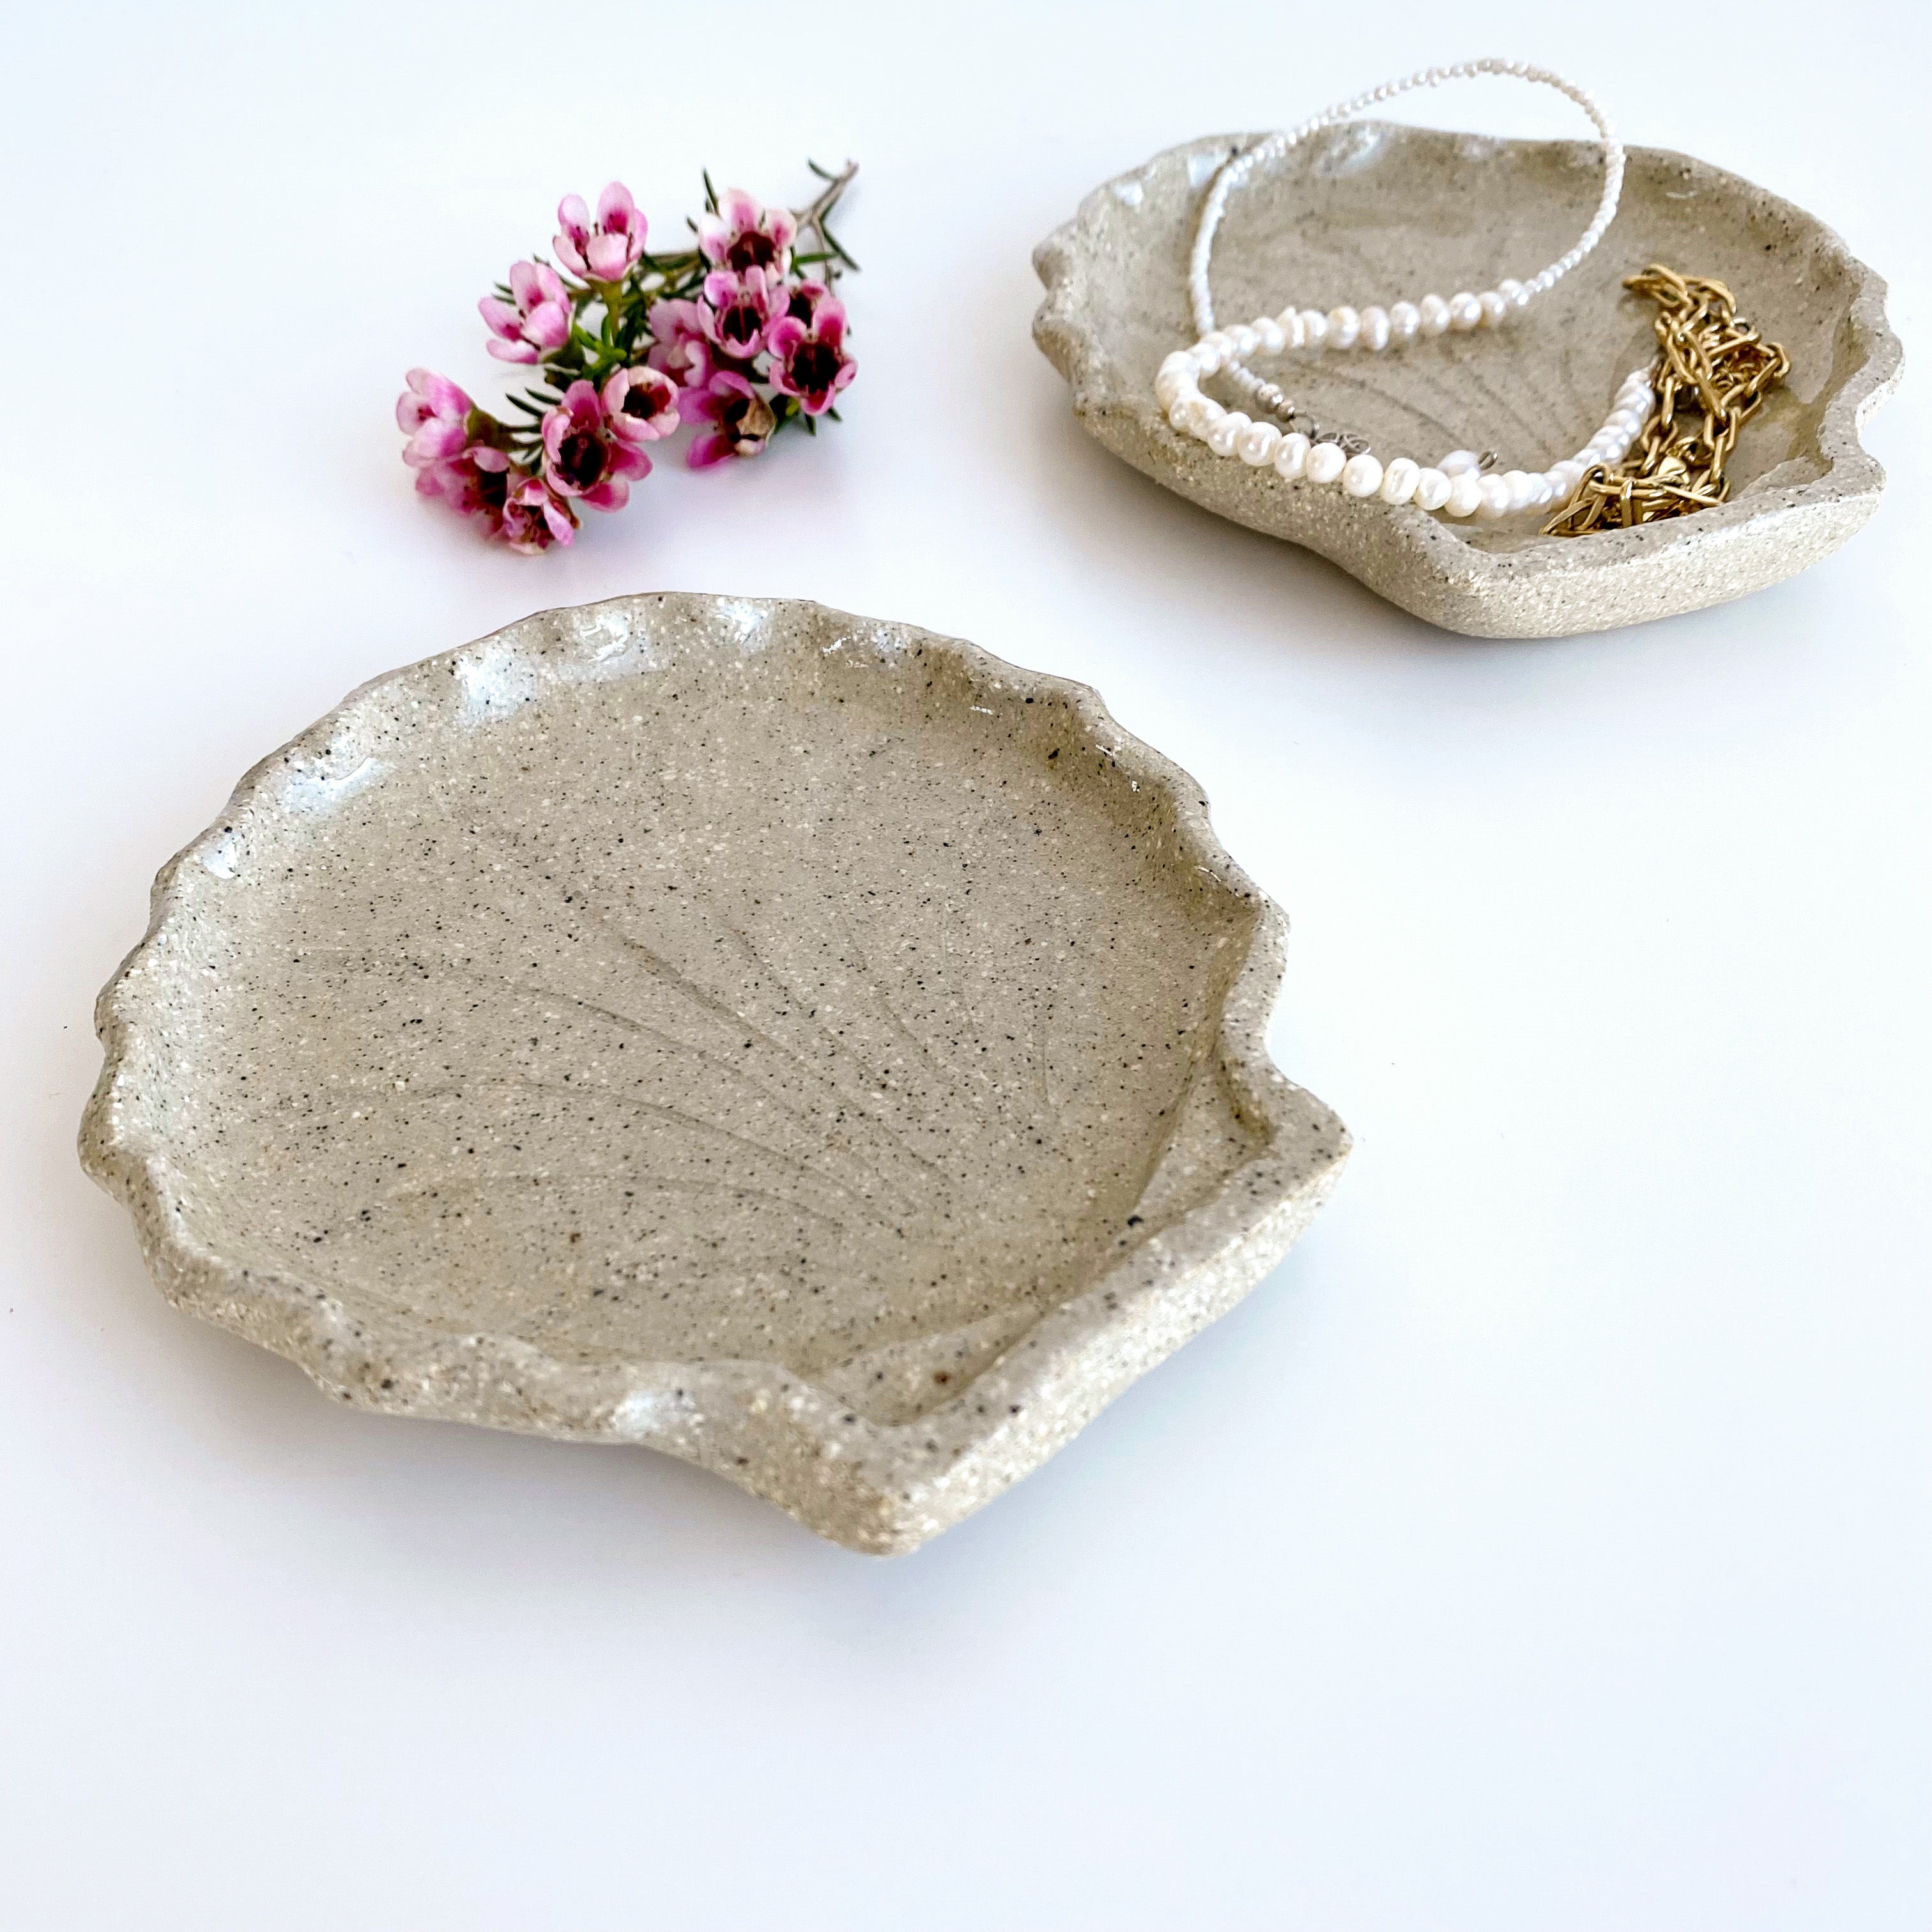 Scallop Shell Dish - ceramics - Dancing with juniper